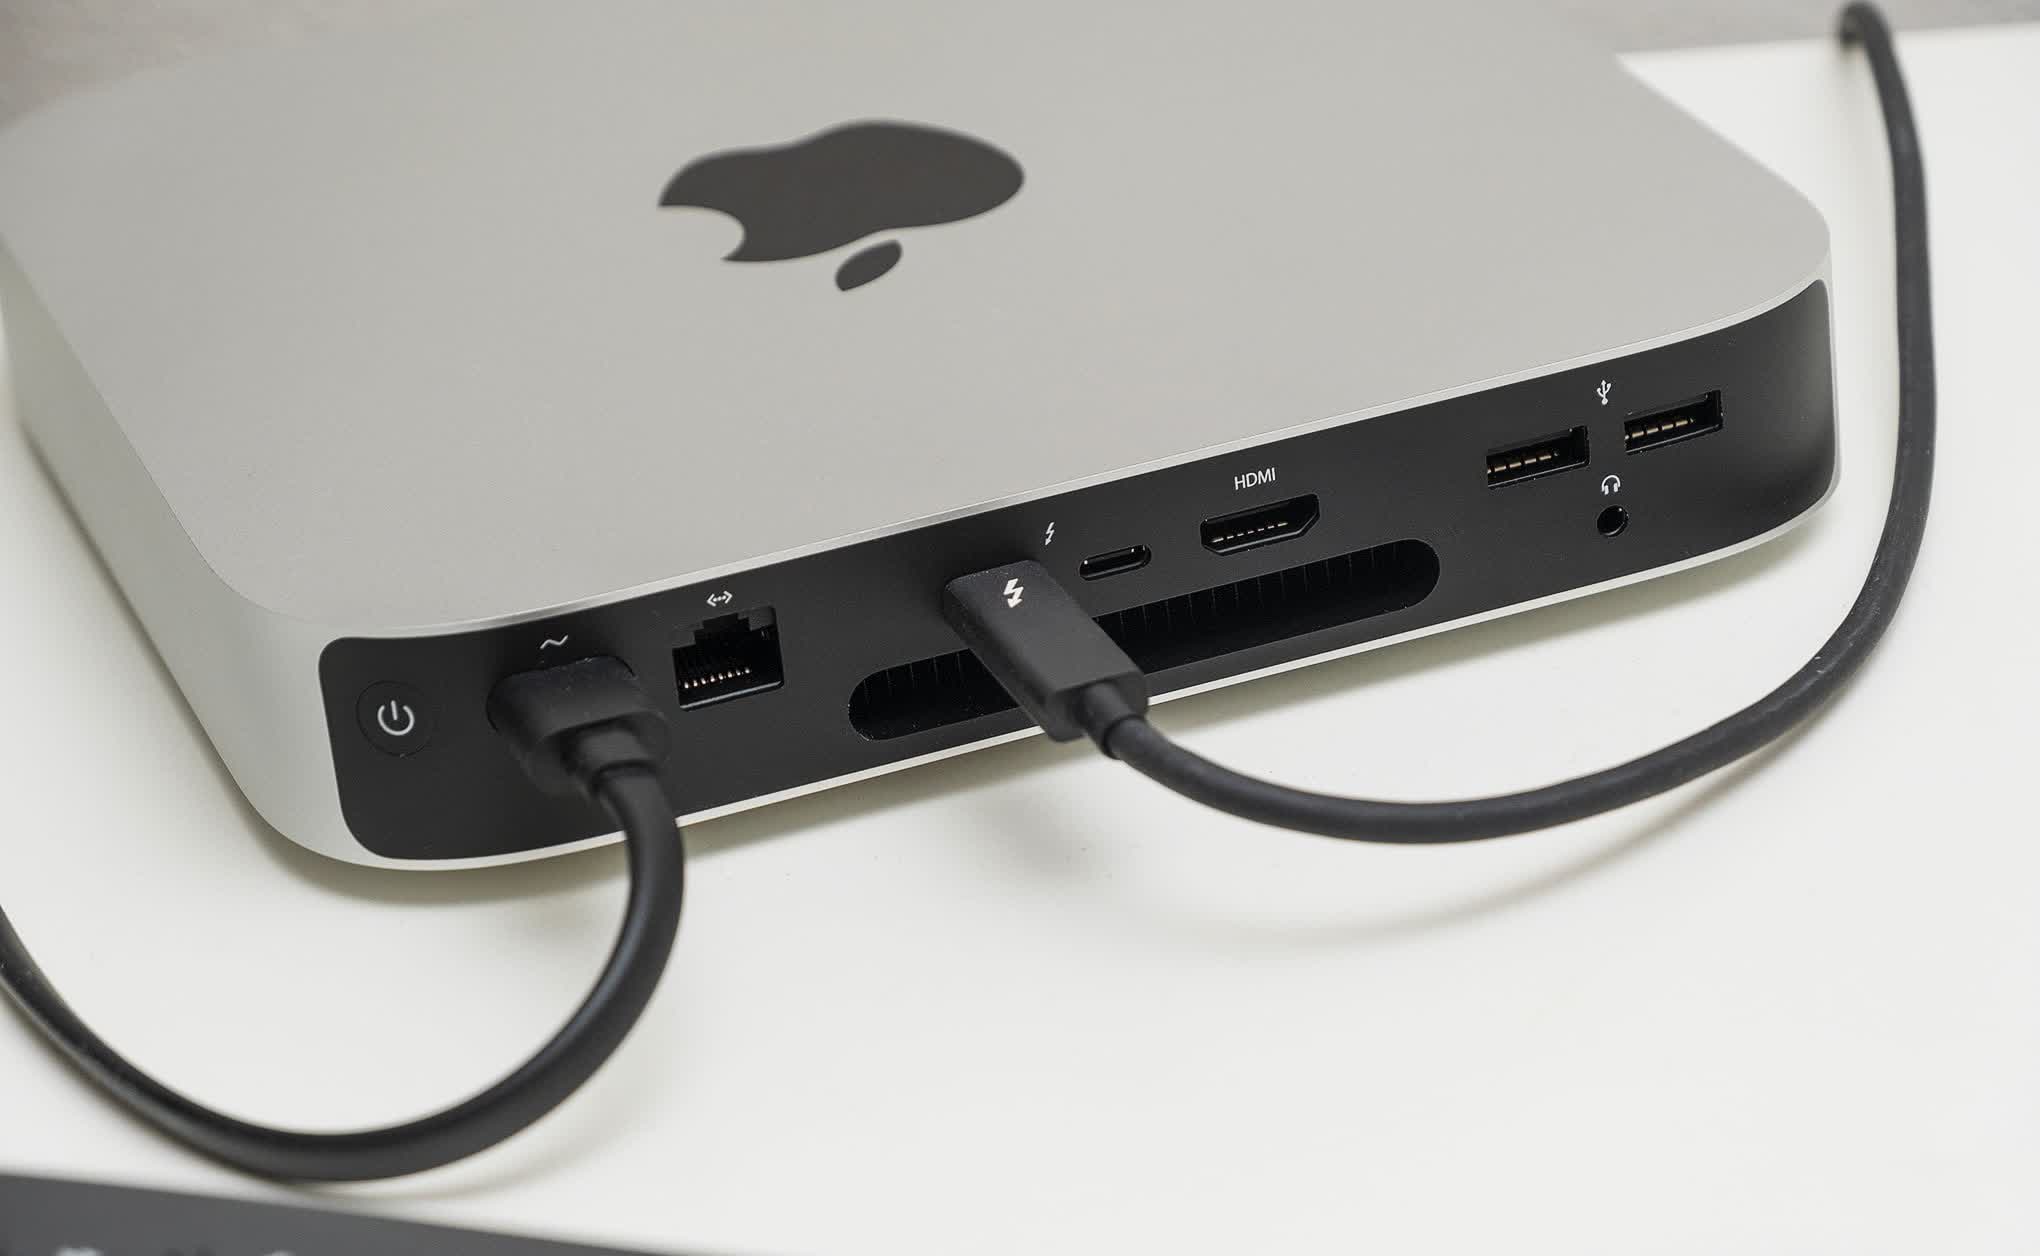 Apple Mac mini M1 power consumption is 3 times lower than Intel model